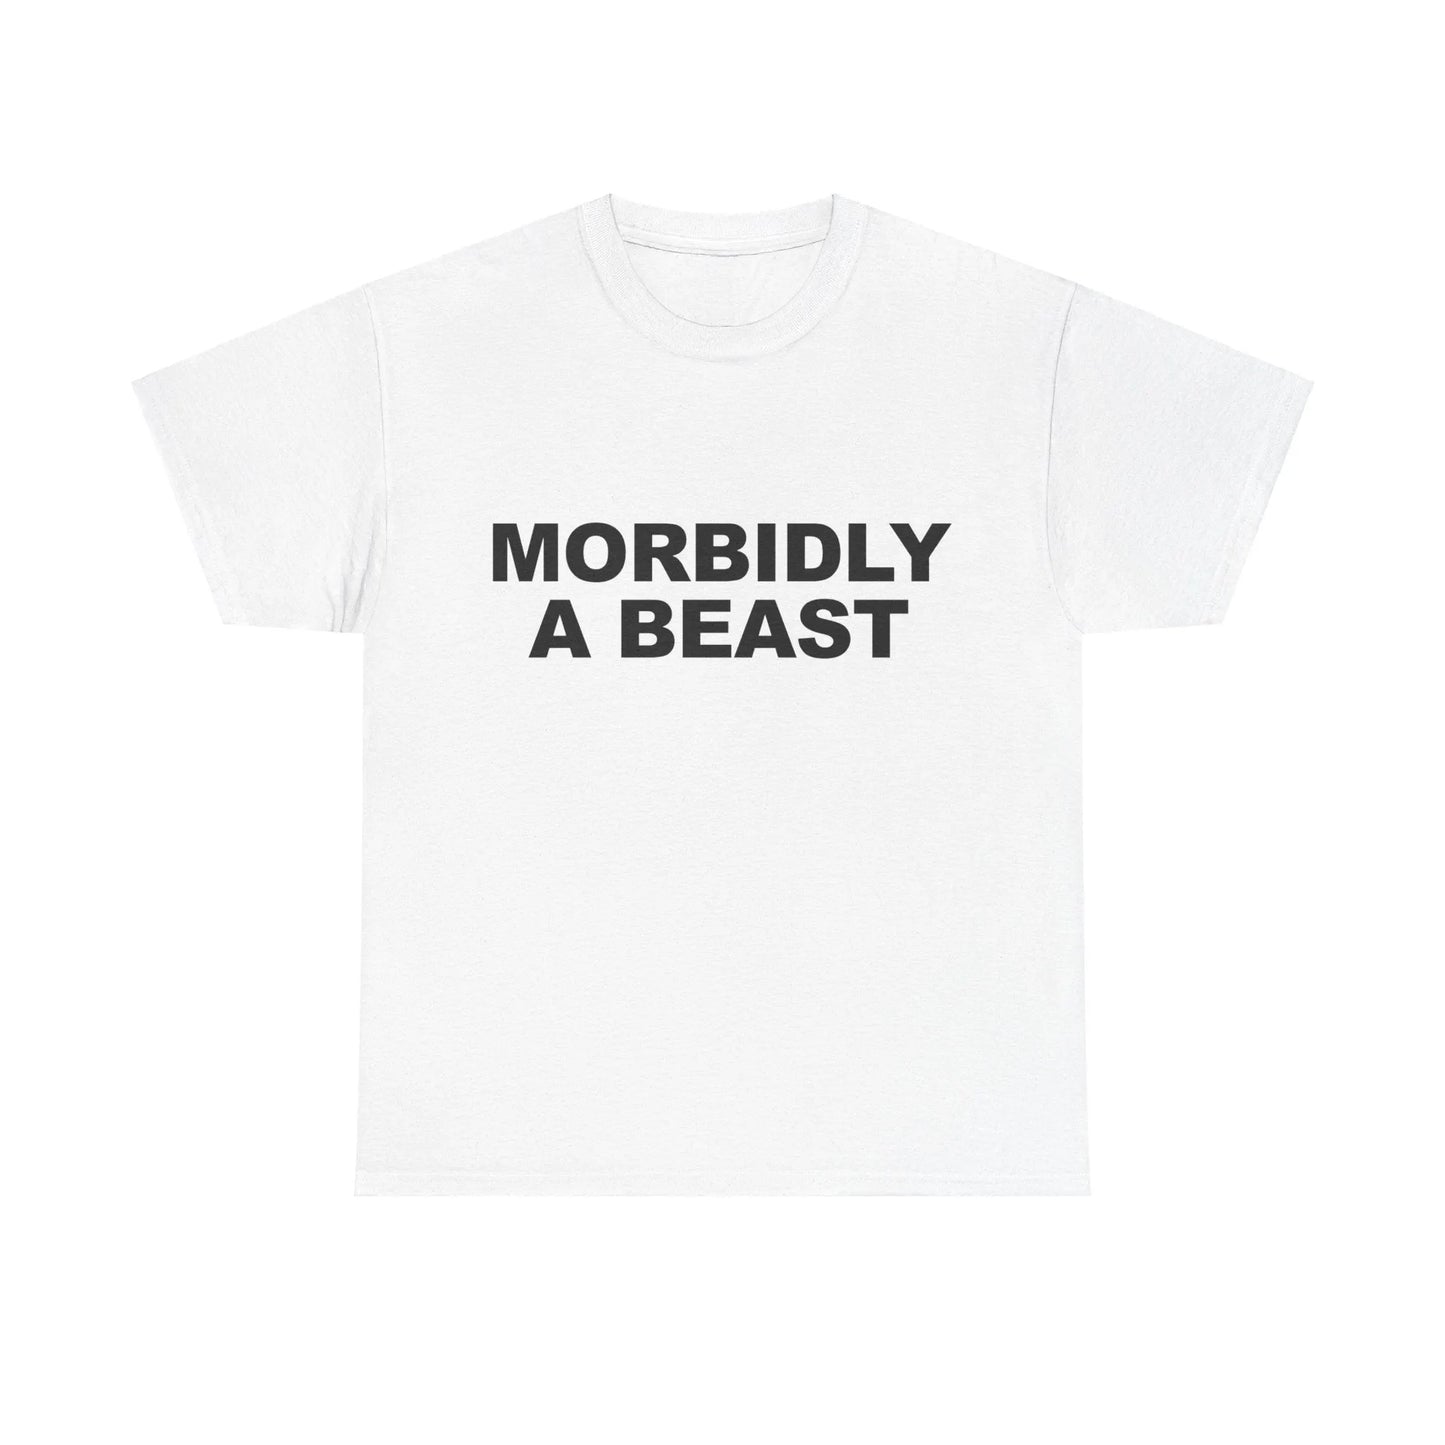 Morbidly A Beast T-Shirt - Failure International failureinternational.com store brand tiktok instagram